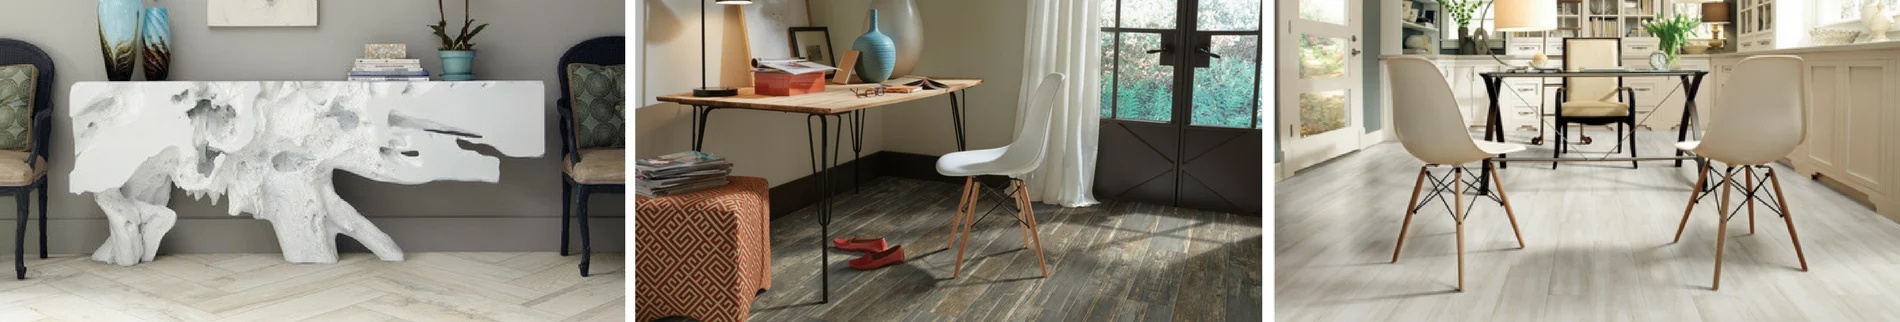  Tile flooring with modern furniture.